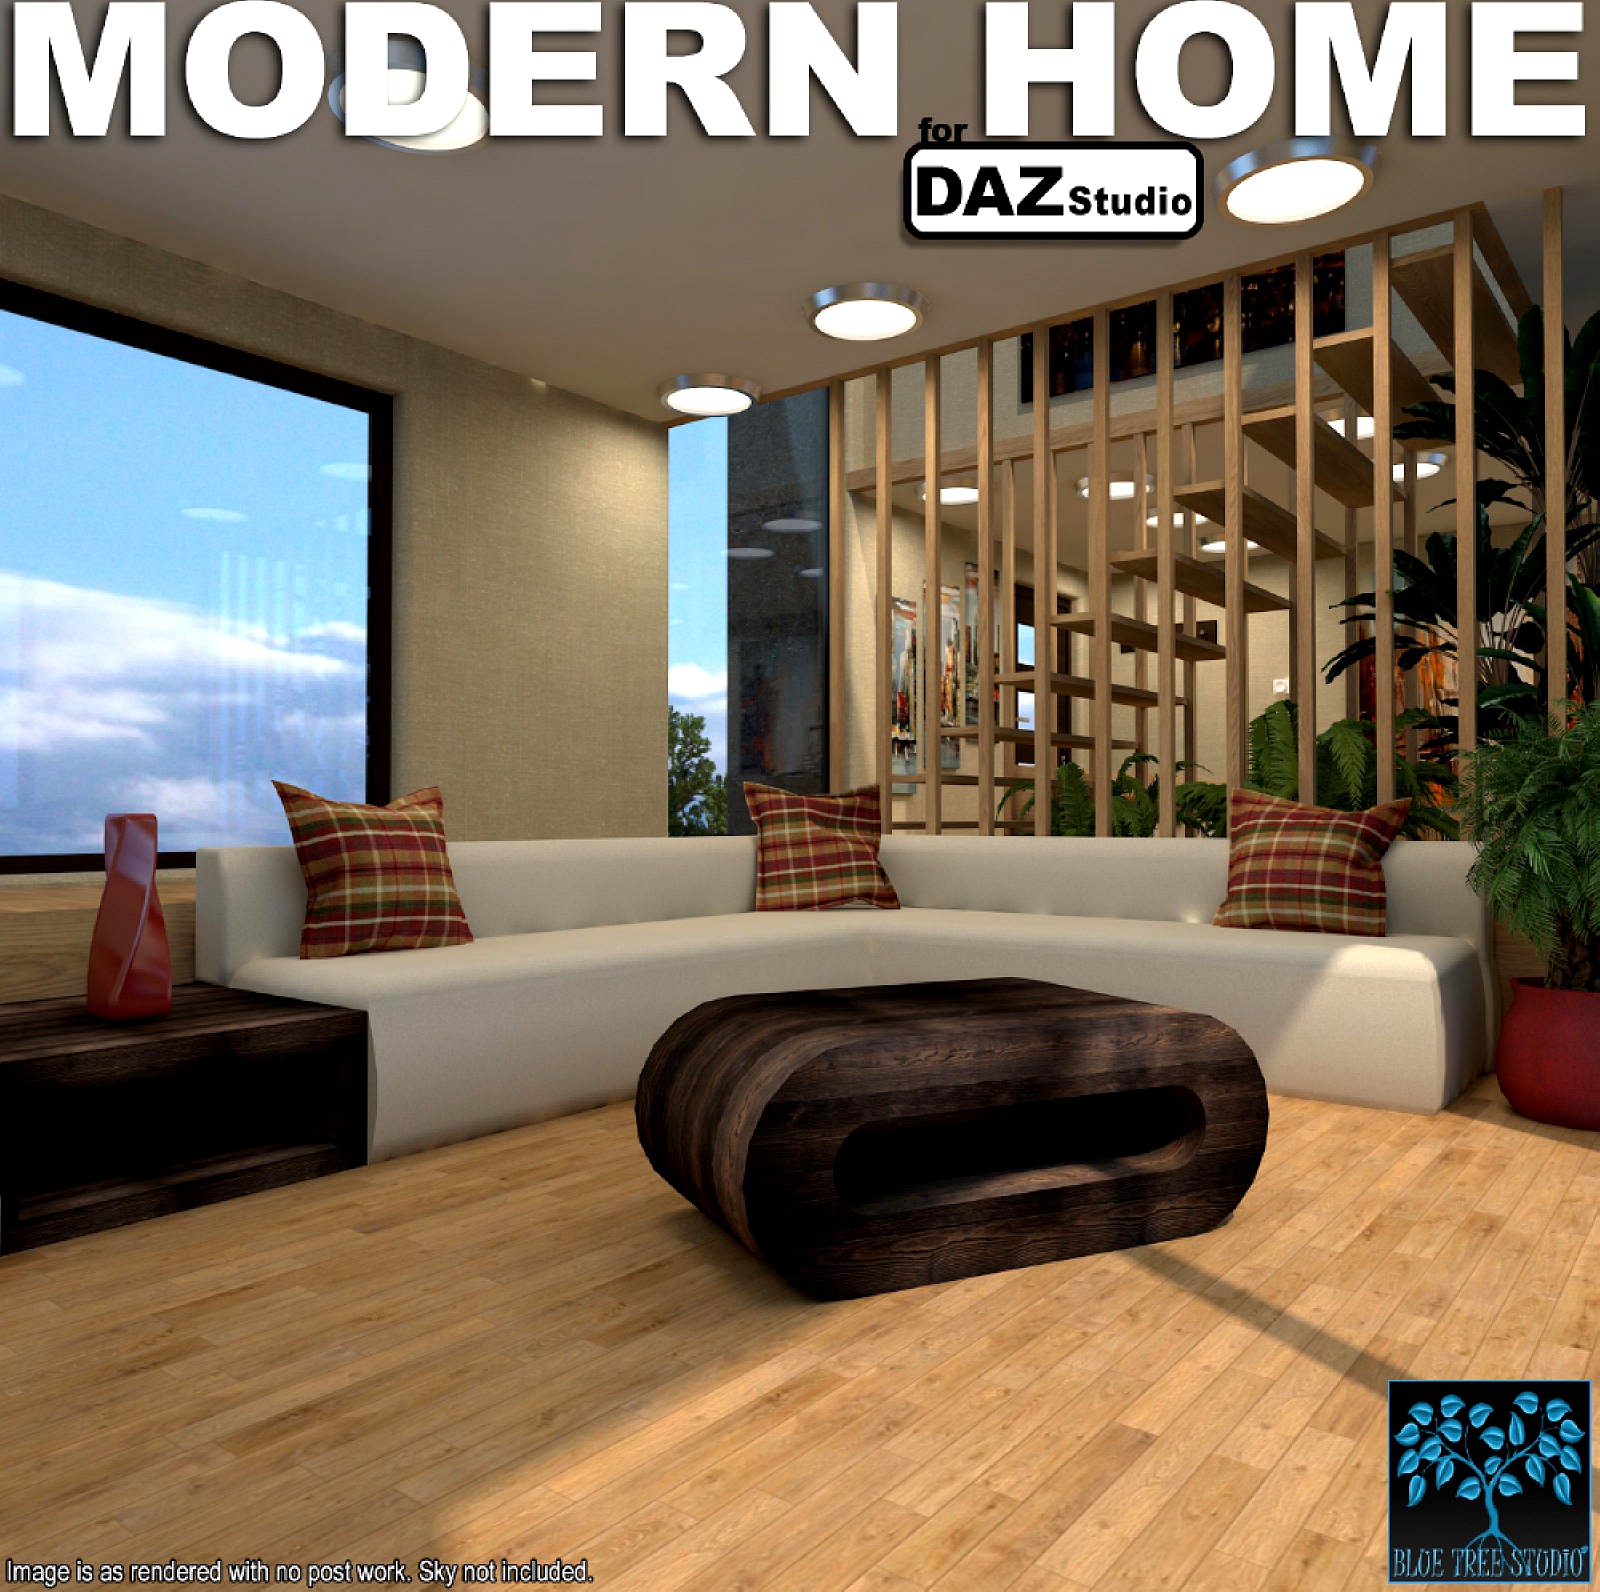 Modern Home for Daz Studio